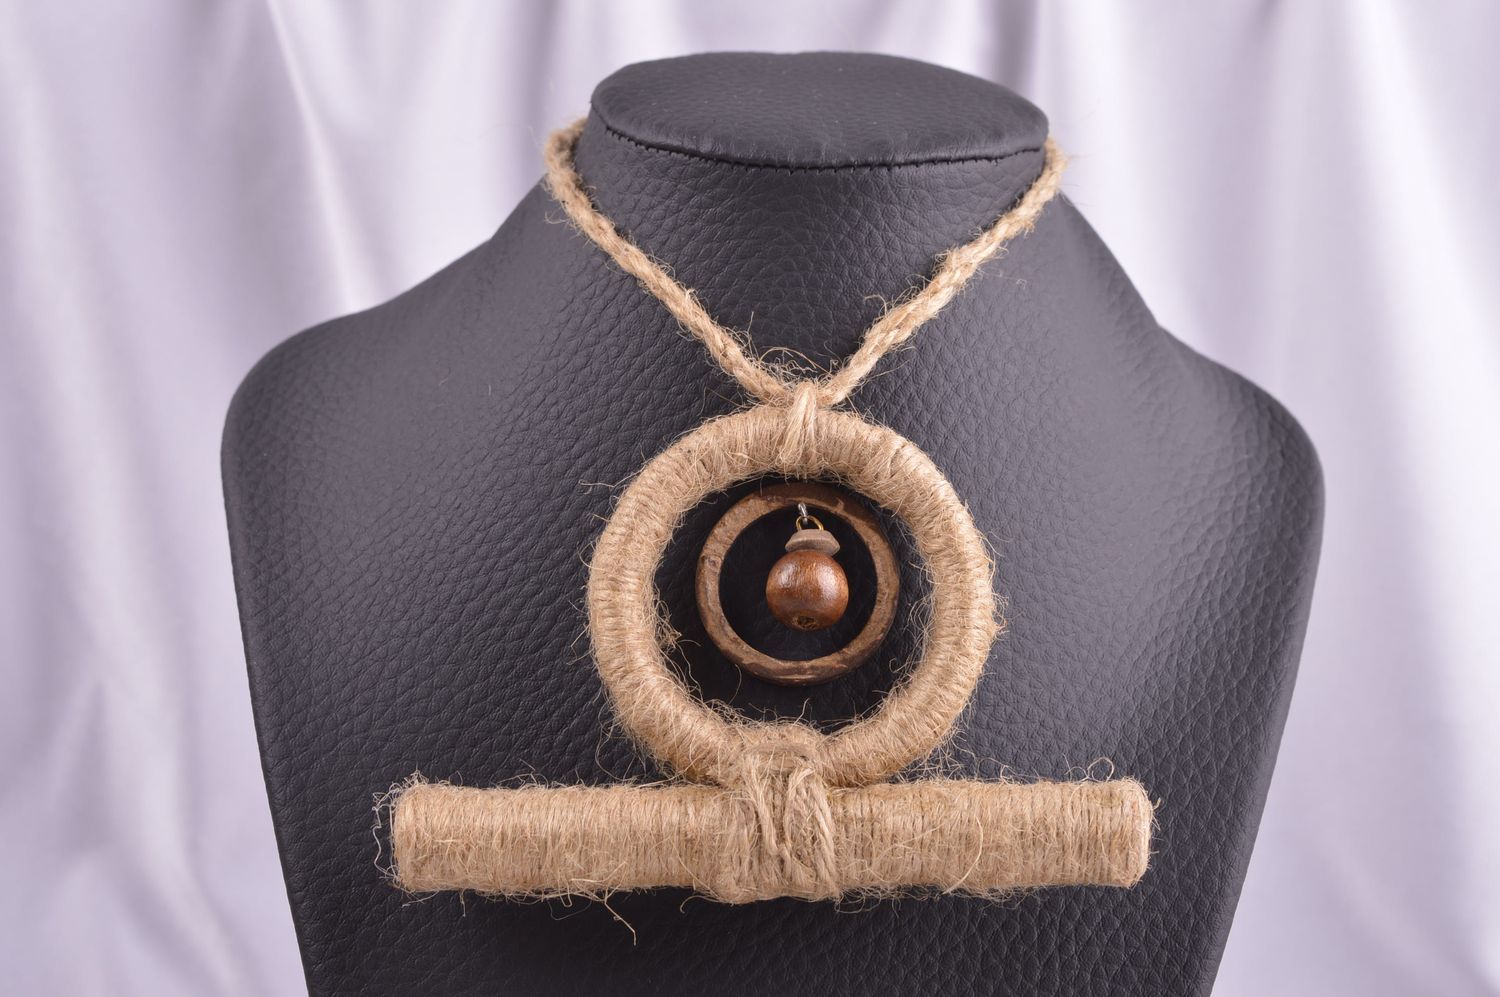 Handmade pendant on lace pendant in ethnic style designer accessory present photo 1